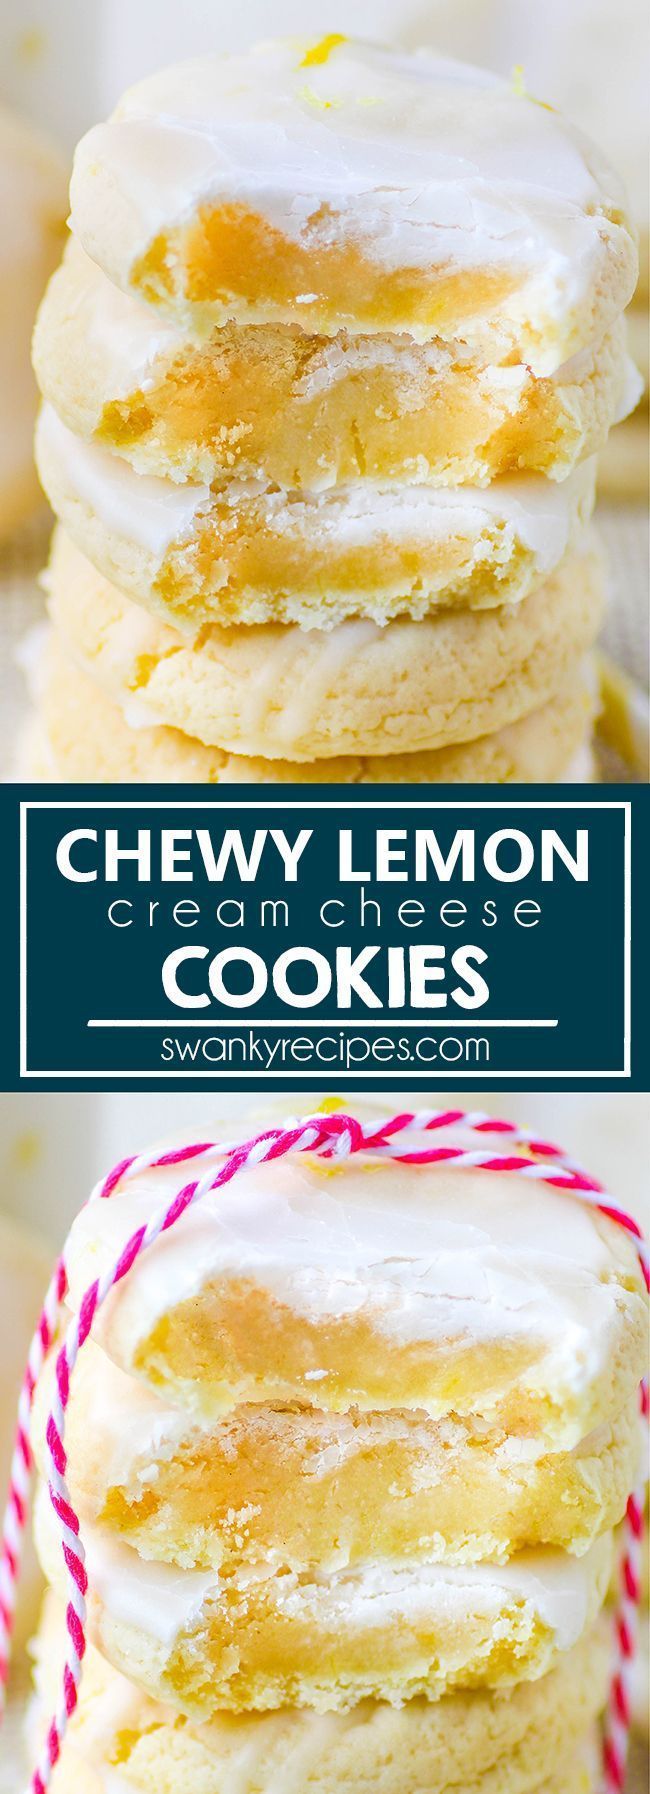 Soft Lemon Cream Cheese Cookies -   19 christmas cookies recipes homemade ideas